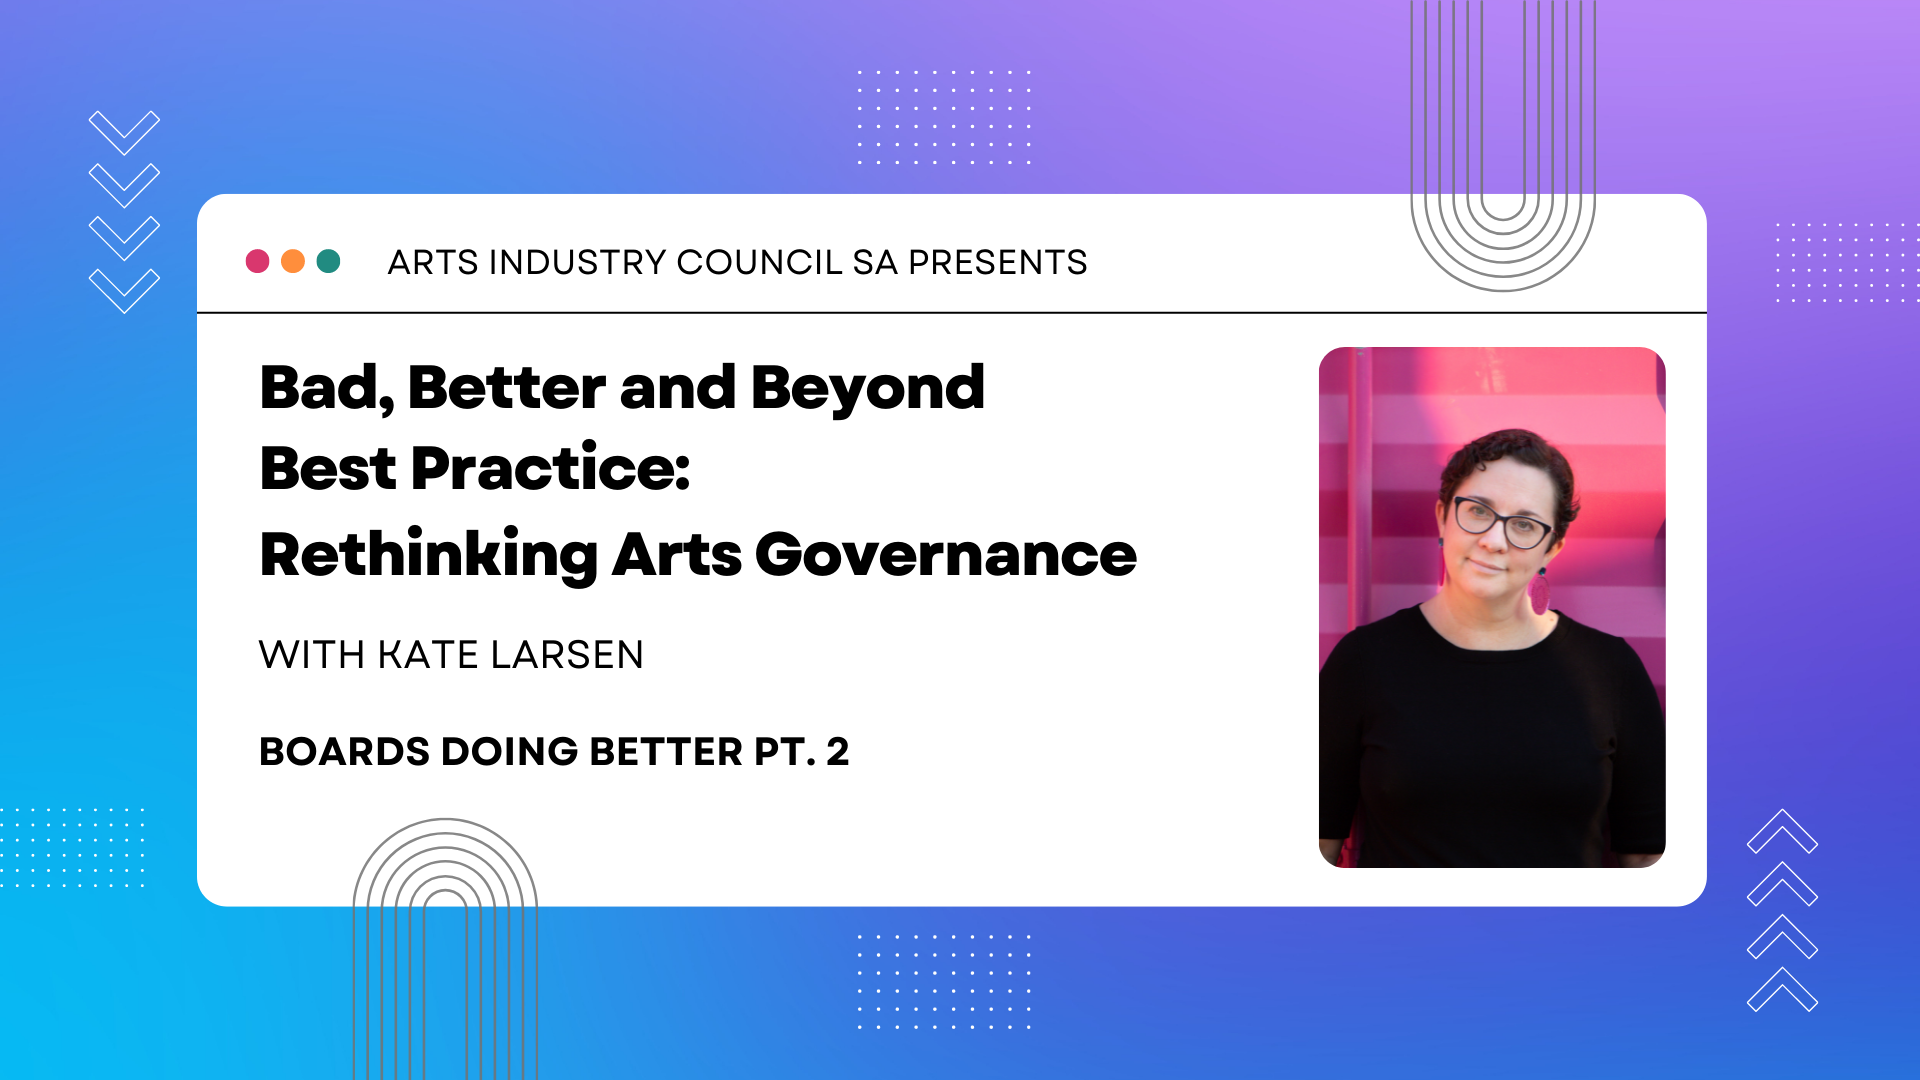 Rethinking Arts Governance: Session 2, Part 2 Boards Doing Better